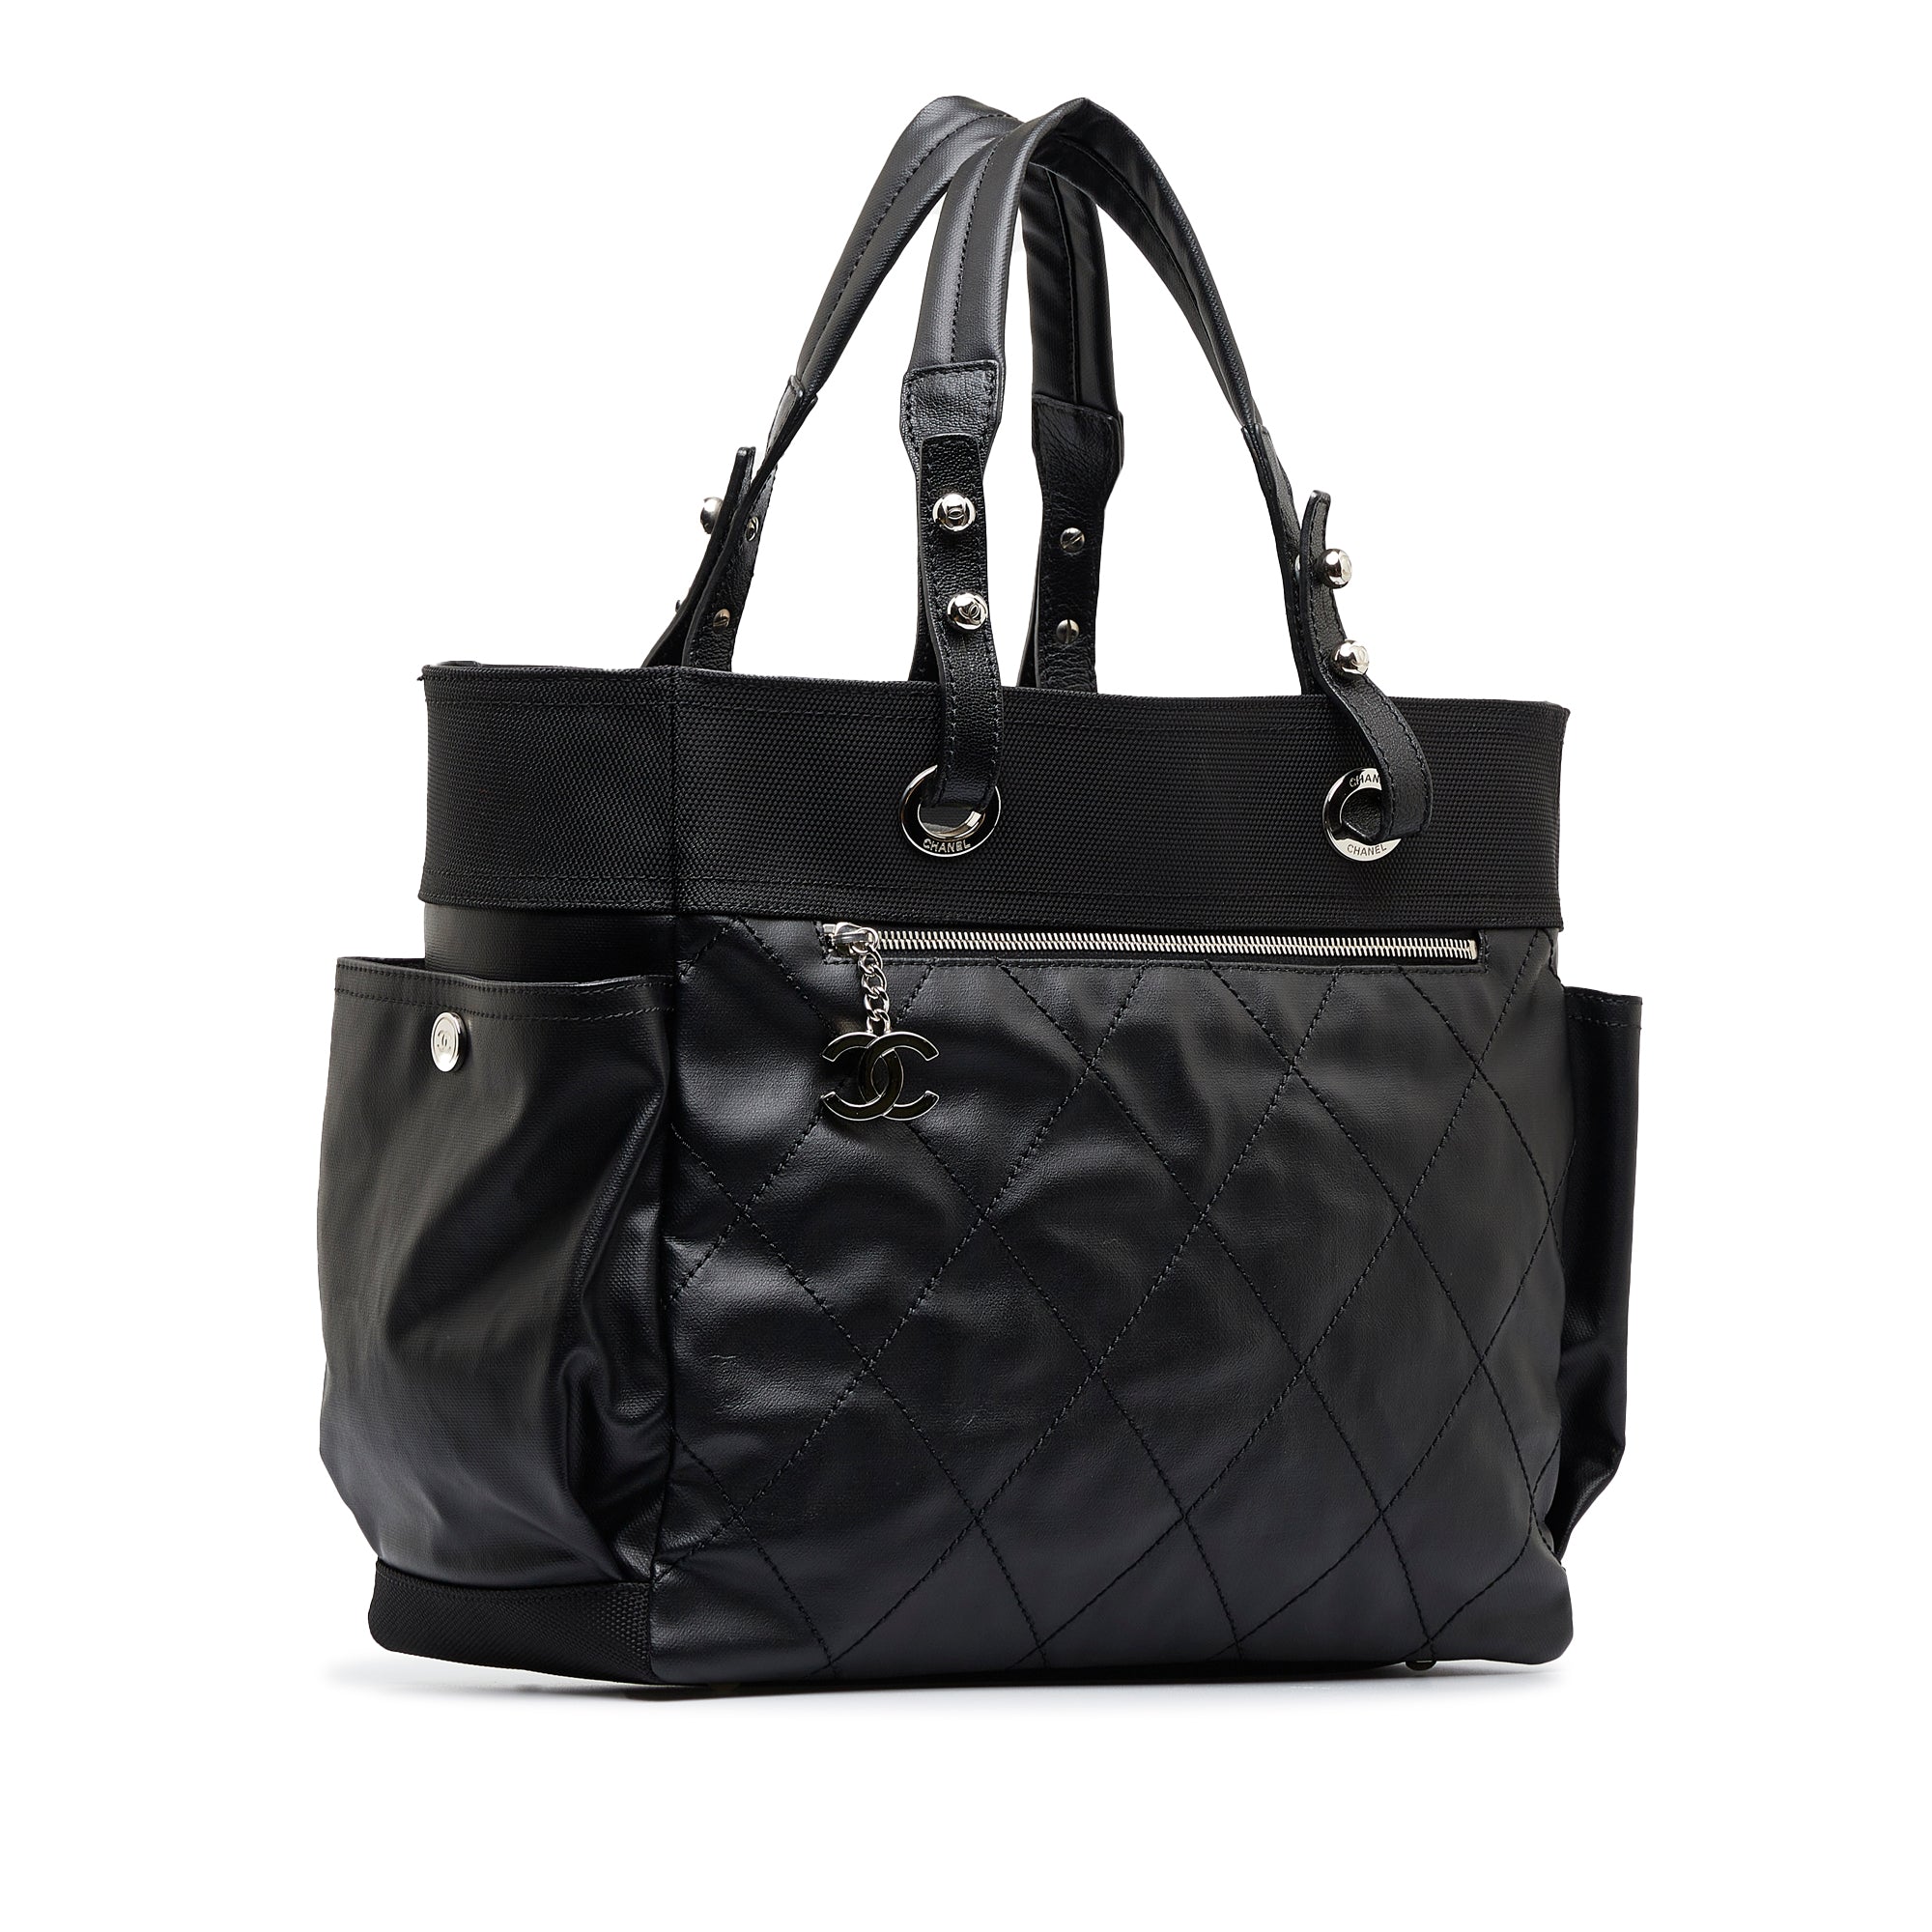 Chanel Paris Biarritz Black Canvas Tote Bag (Pre-Owned)